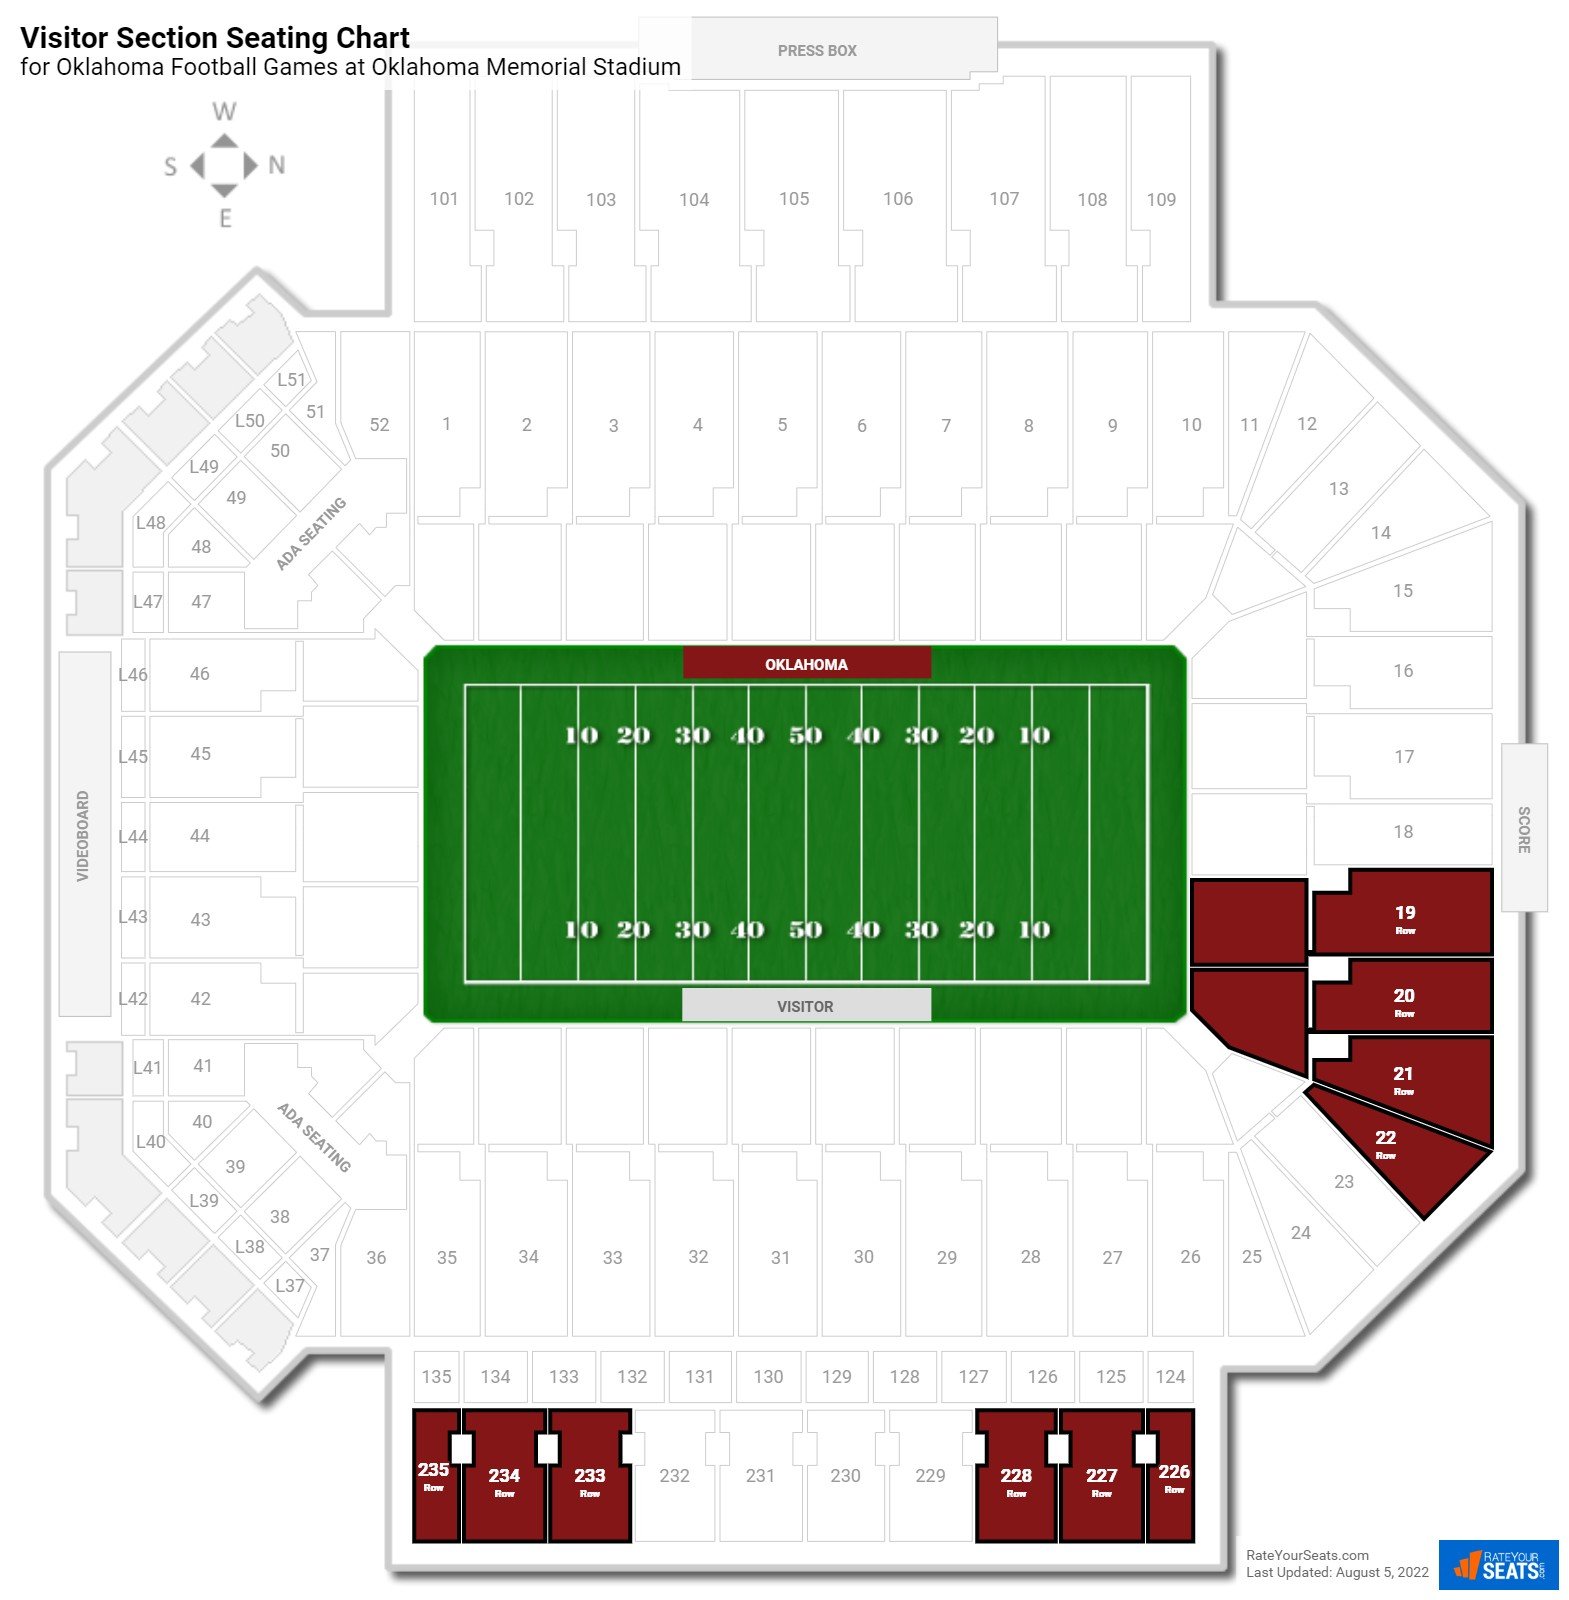 Oklahoma Visitor Section Seating Chart at Oklahoma Memorial Stadium